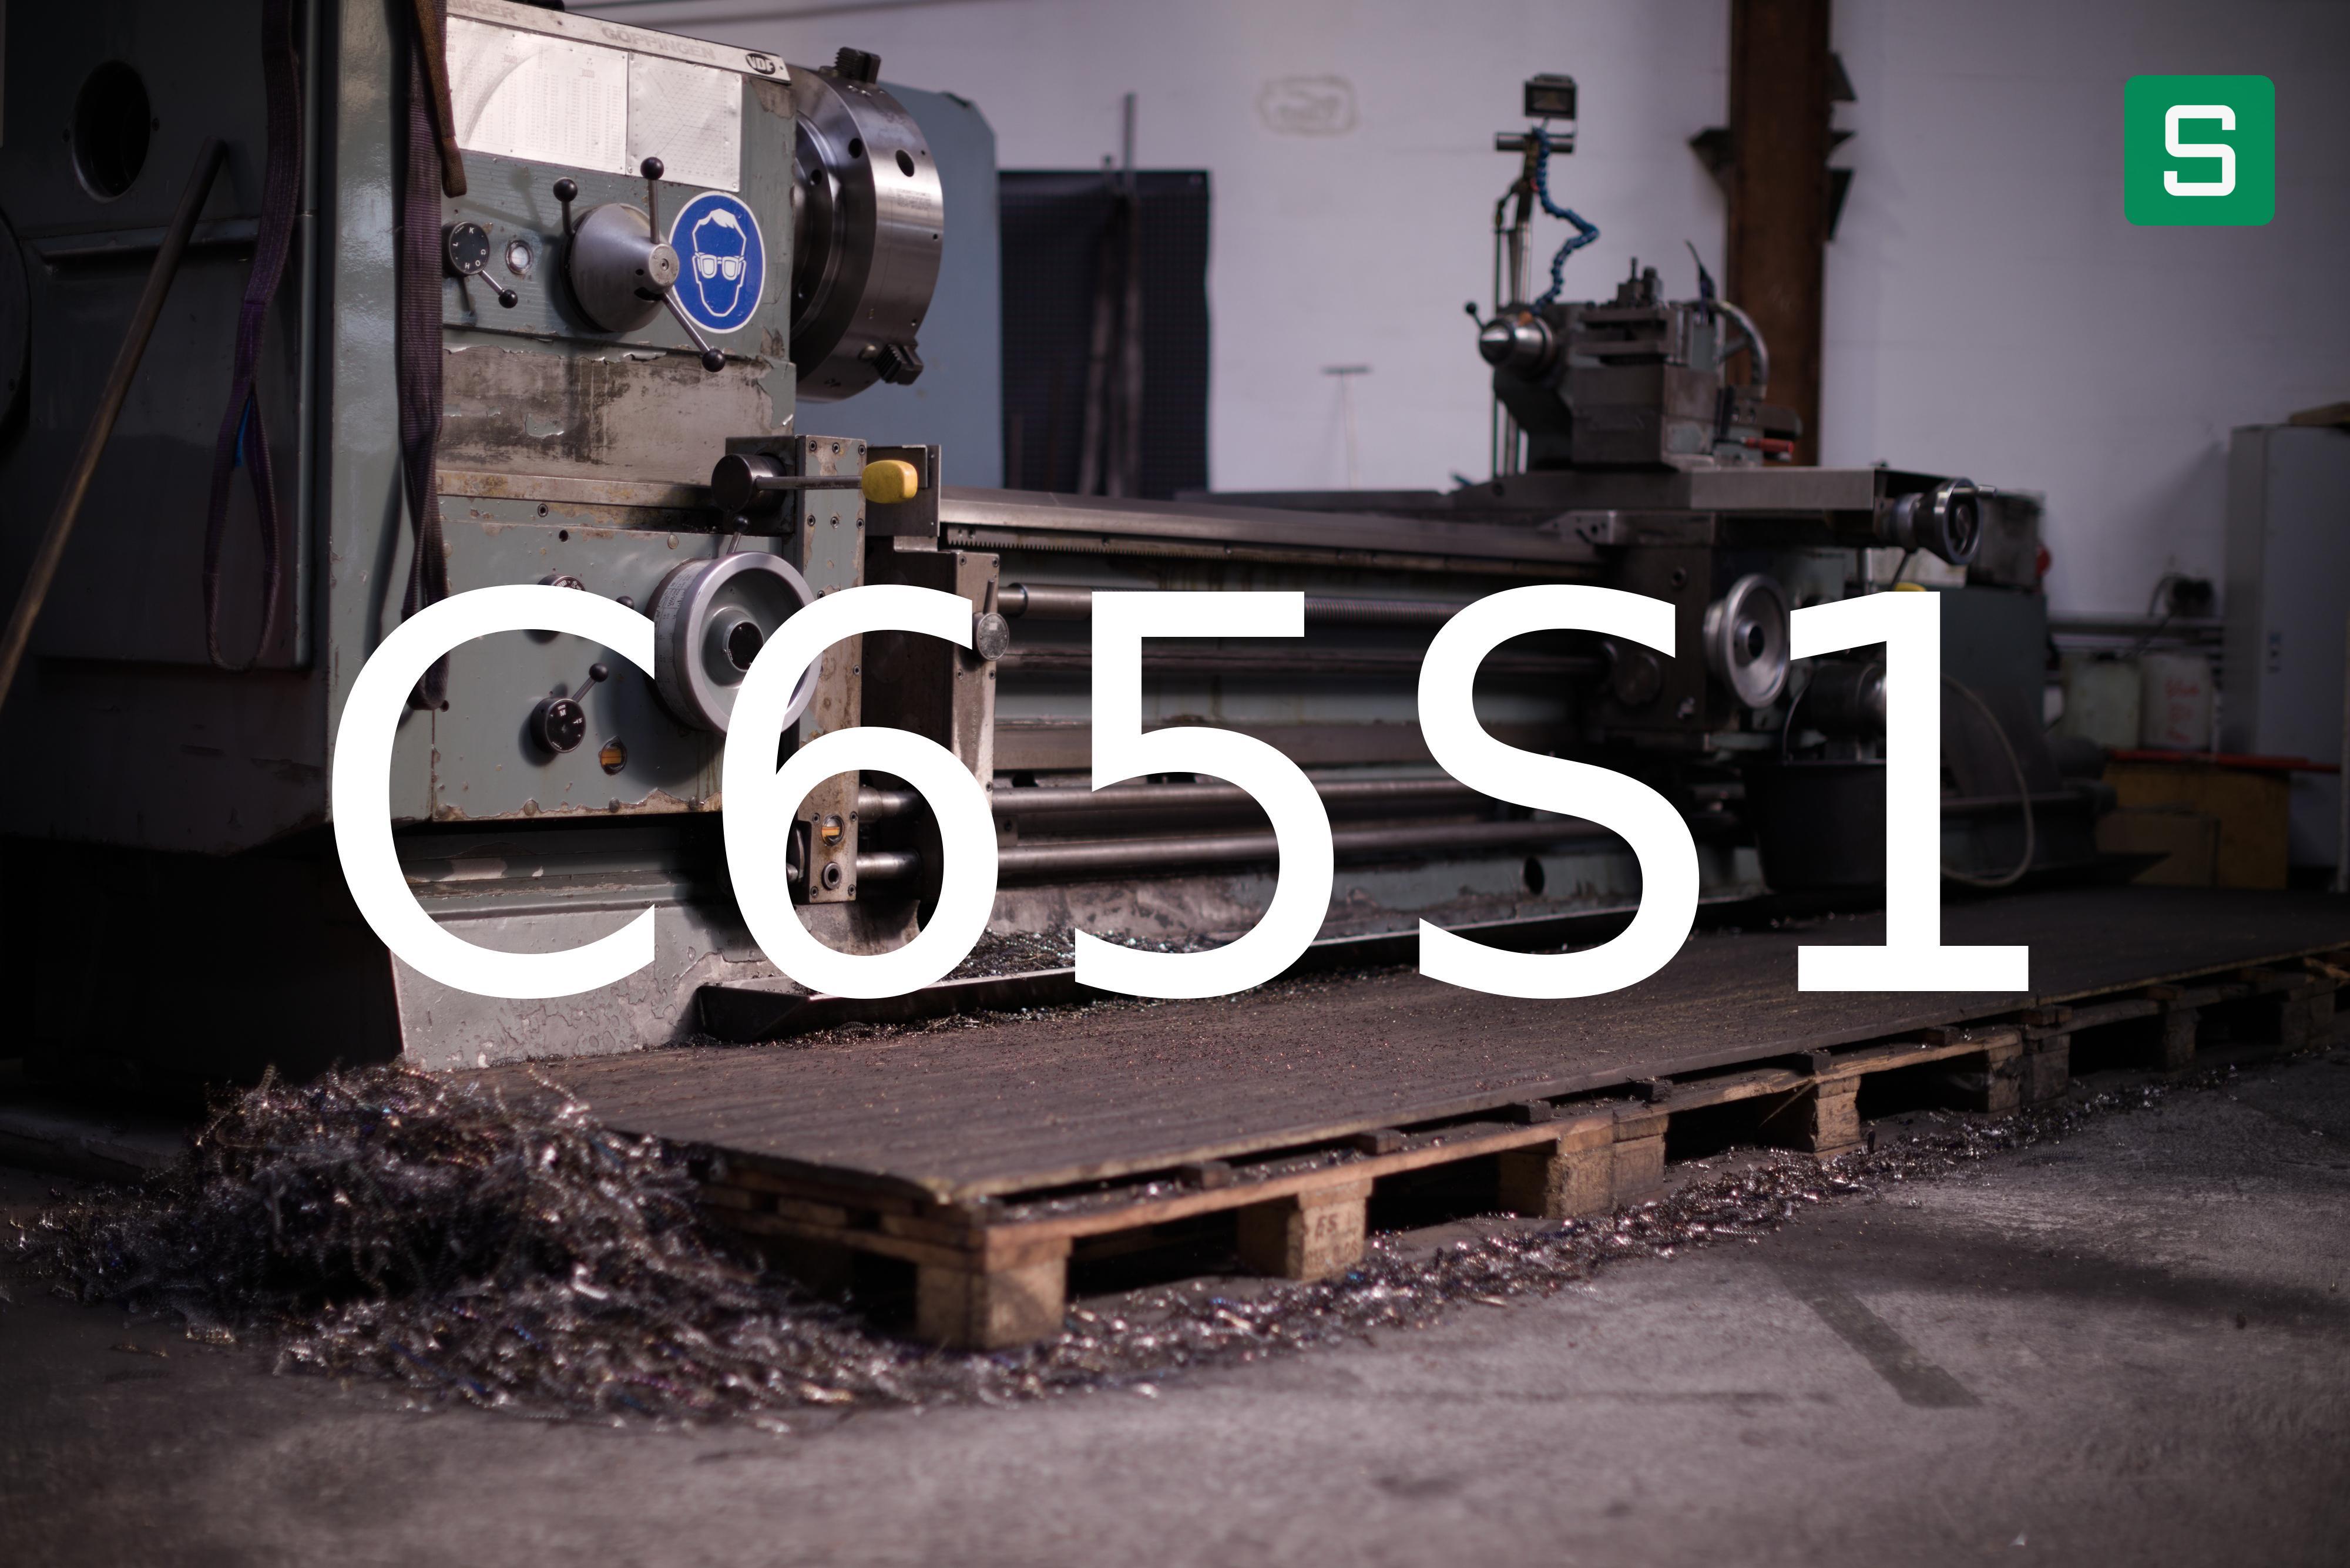 Steel Material: C65S1